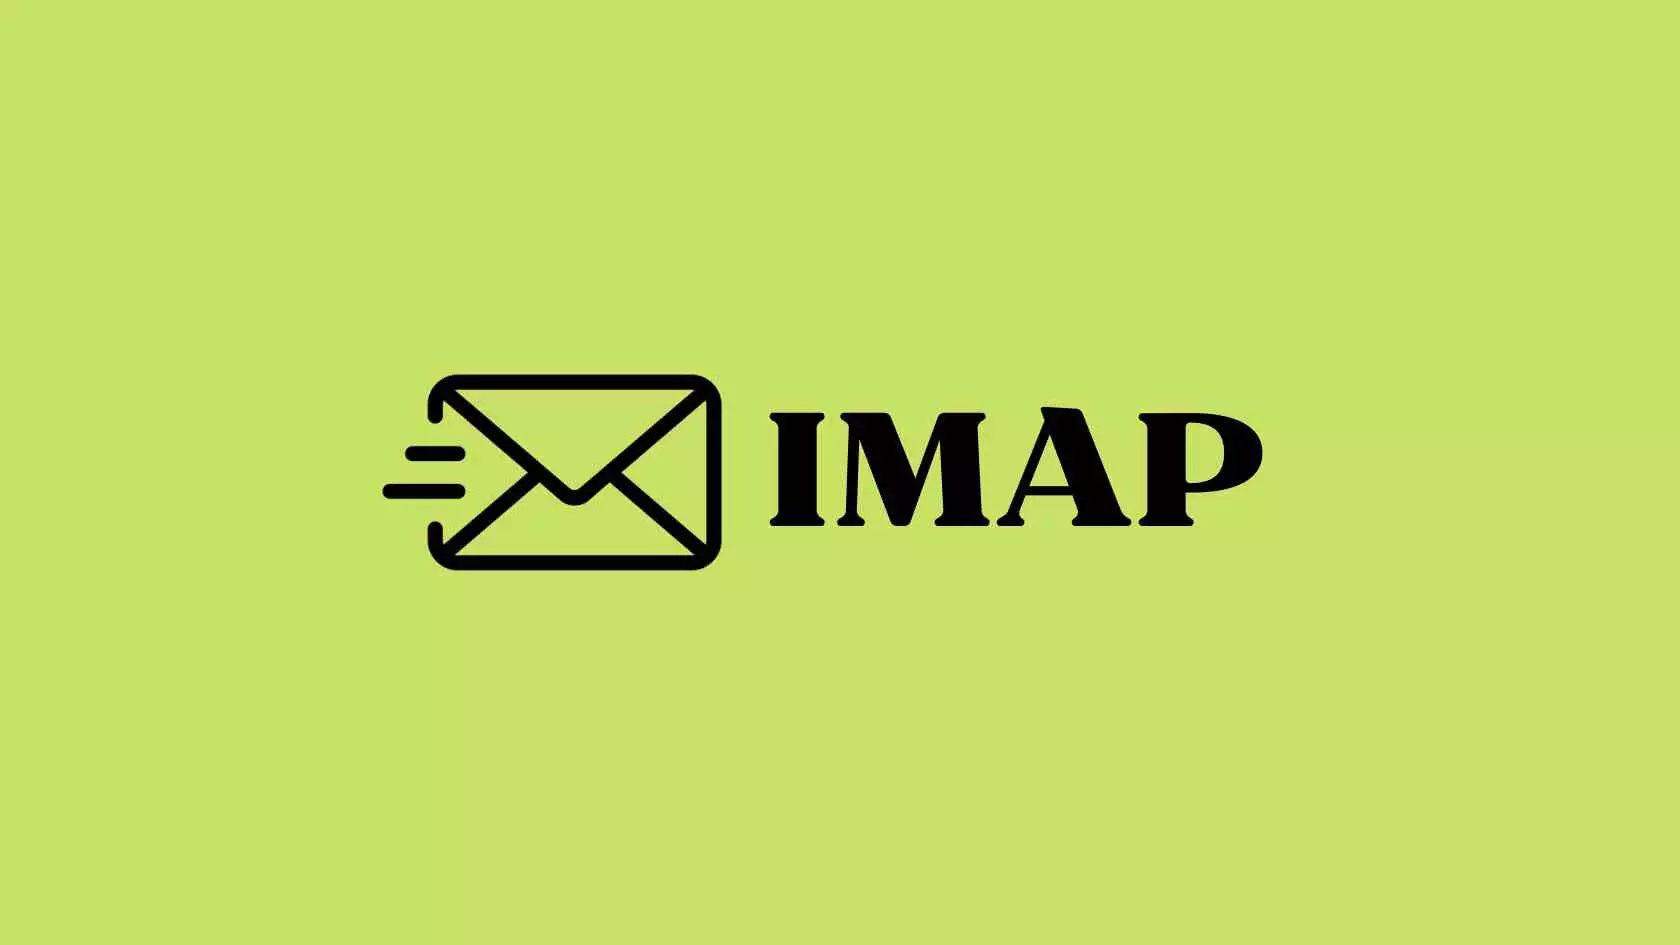 How do I set up IMAP?